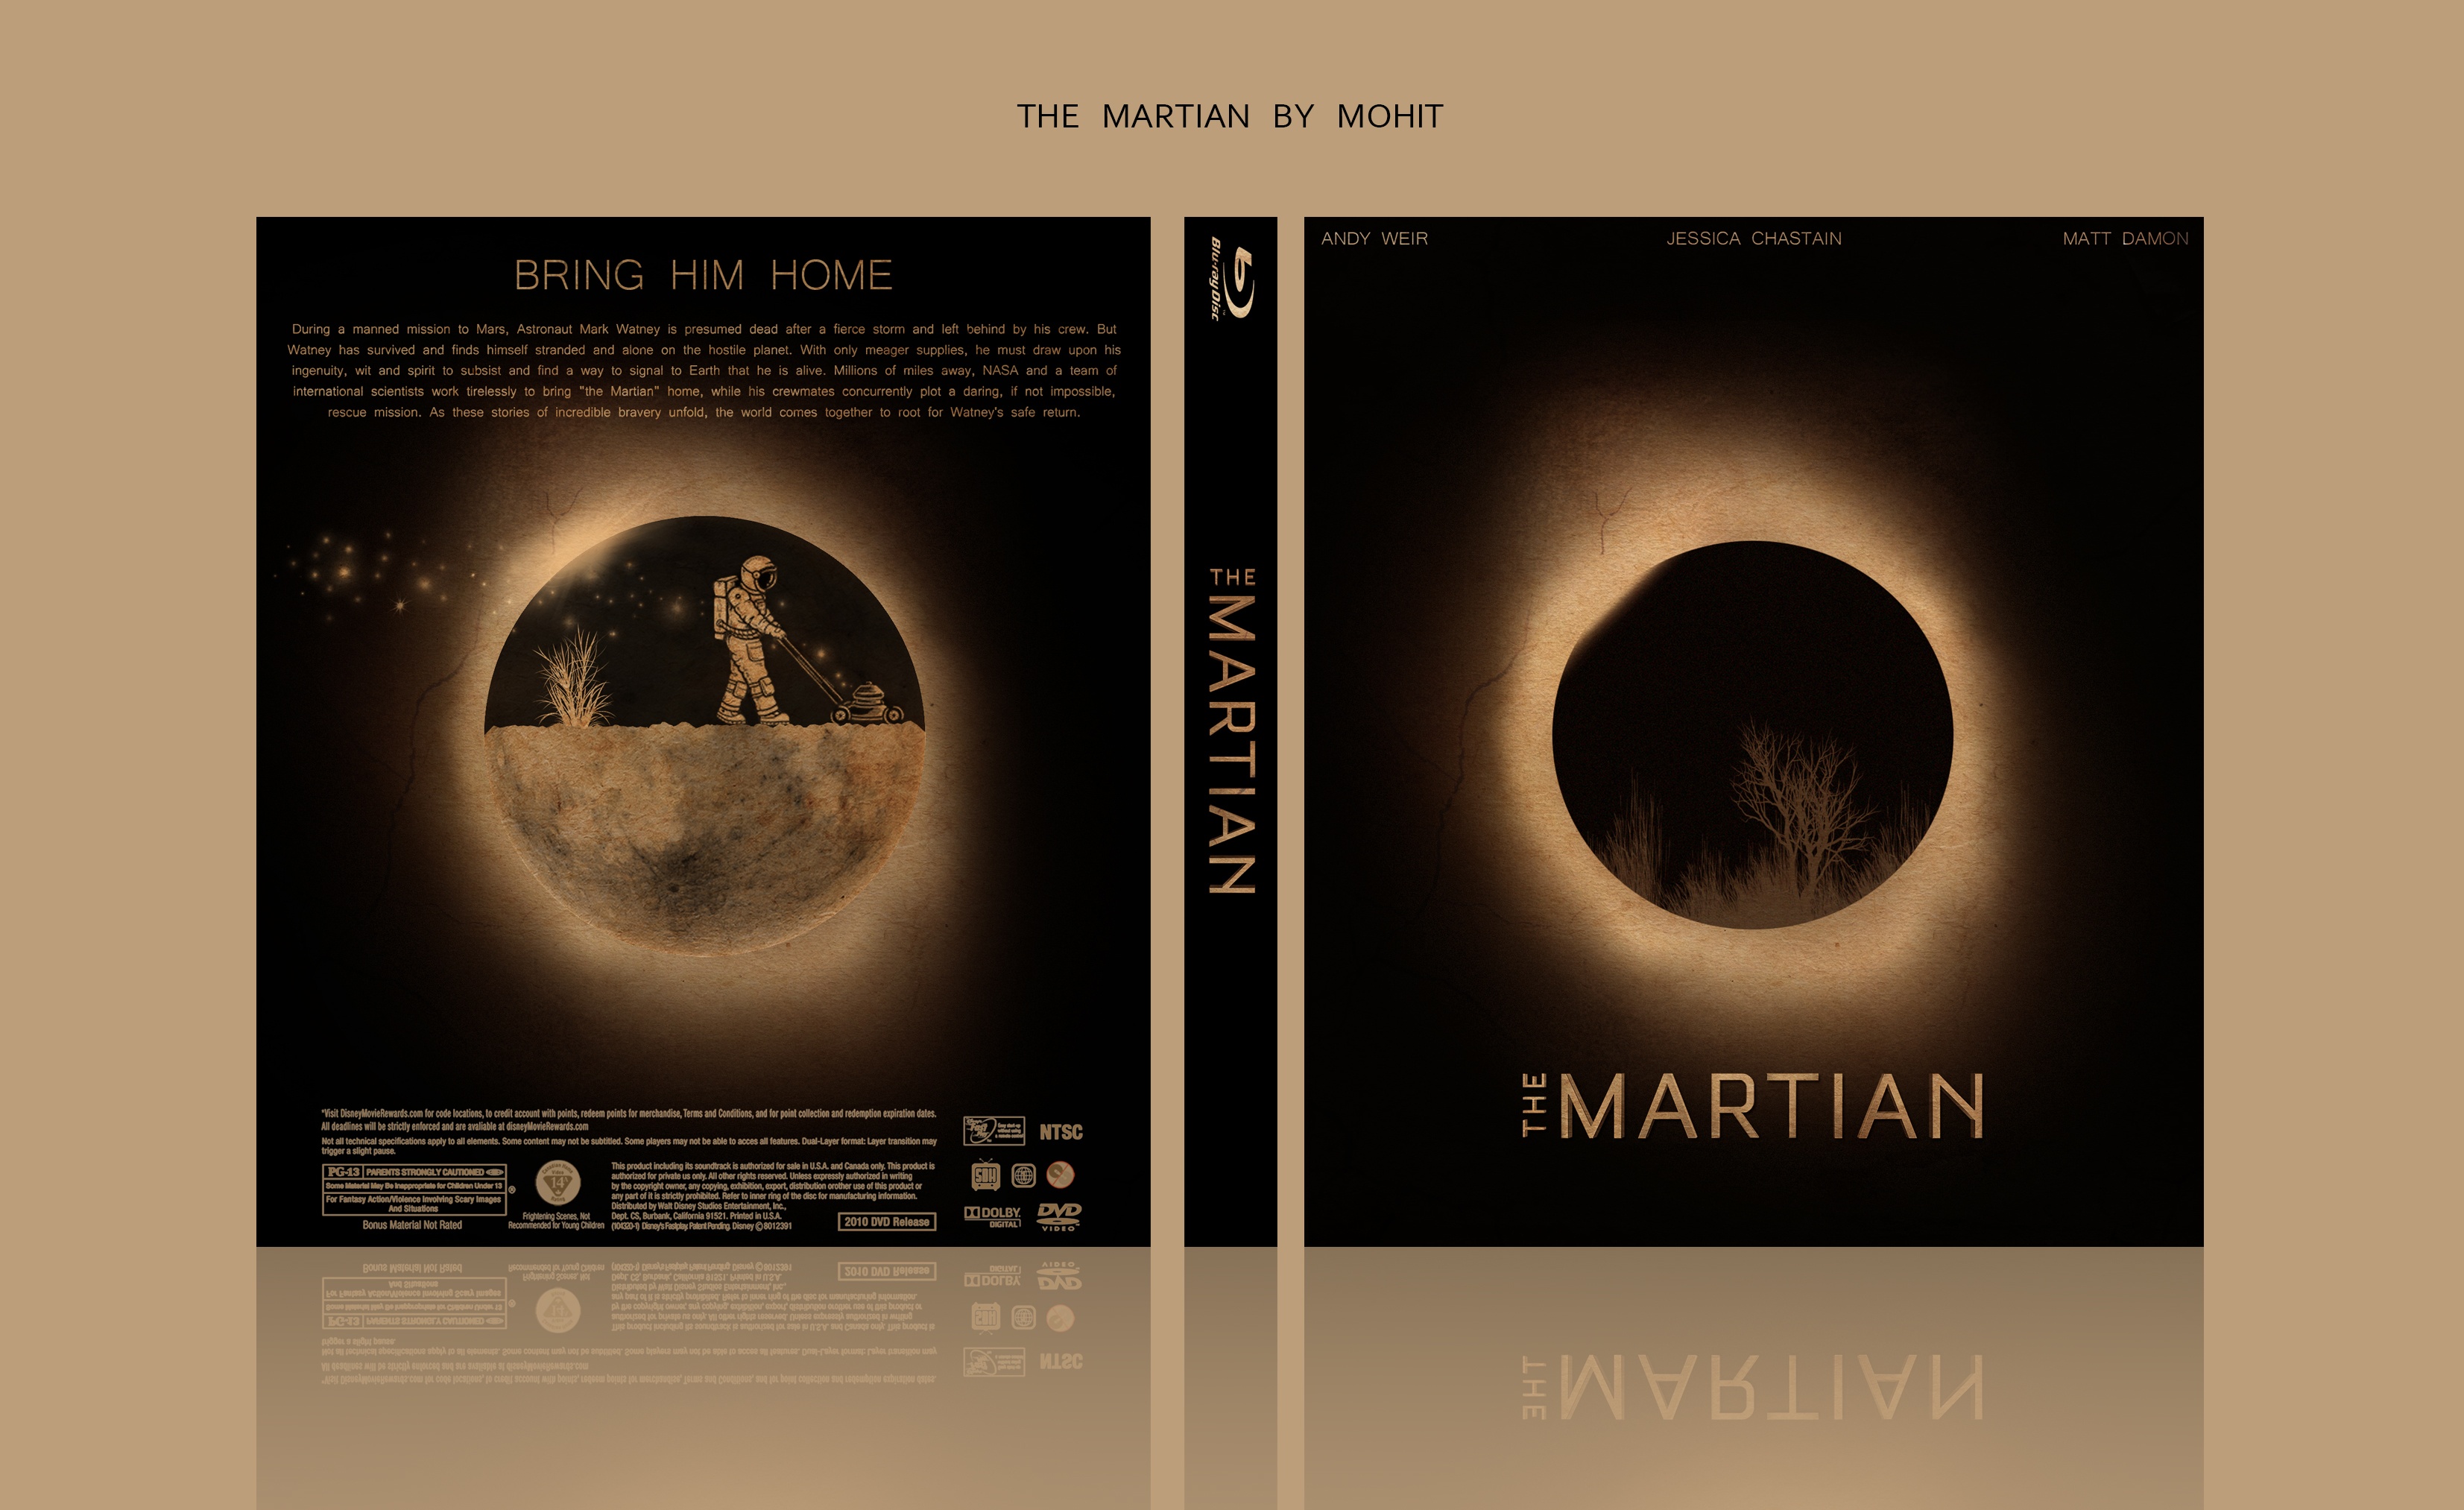 The Martian box cover